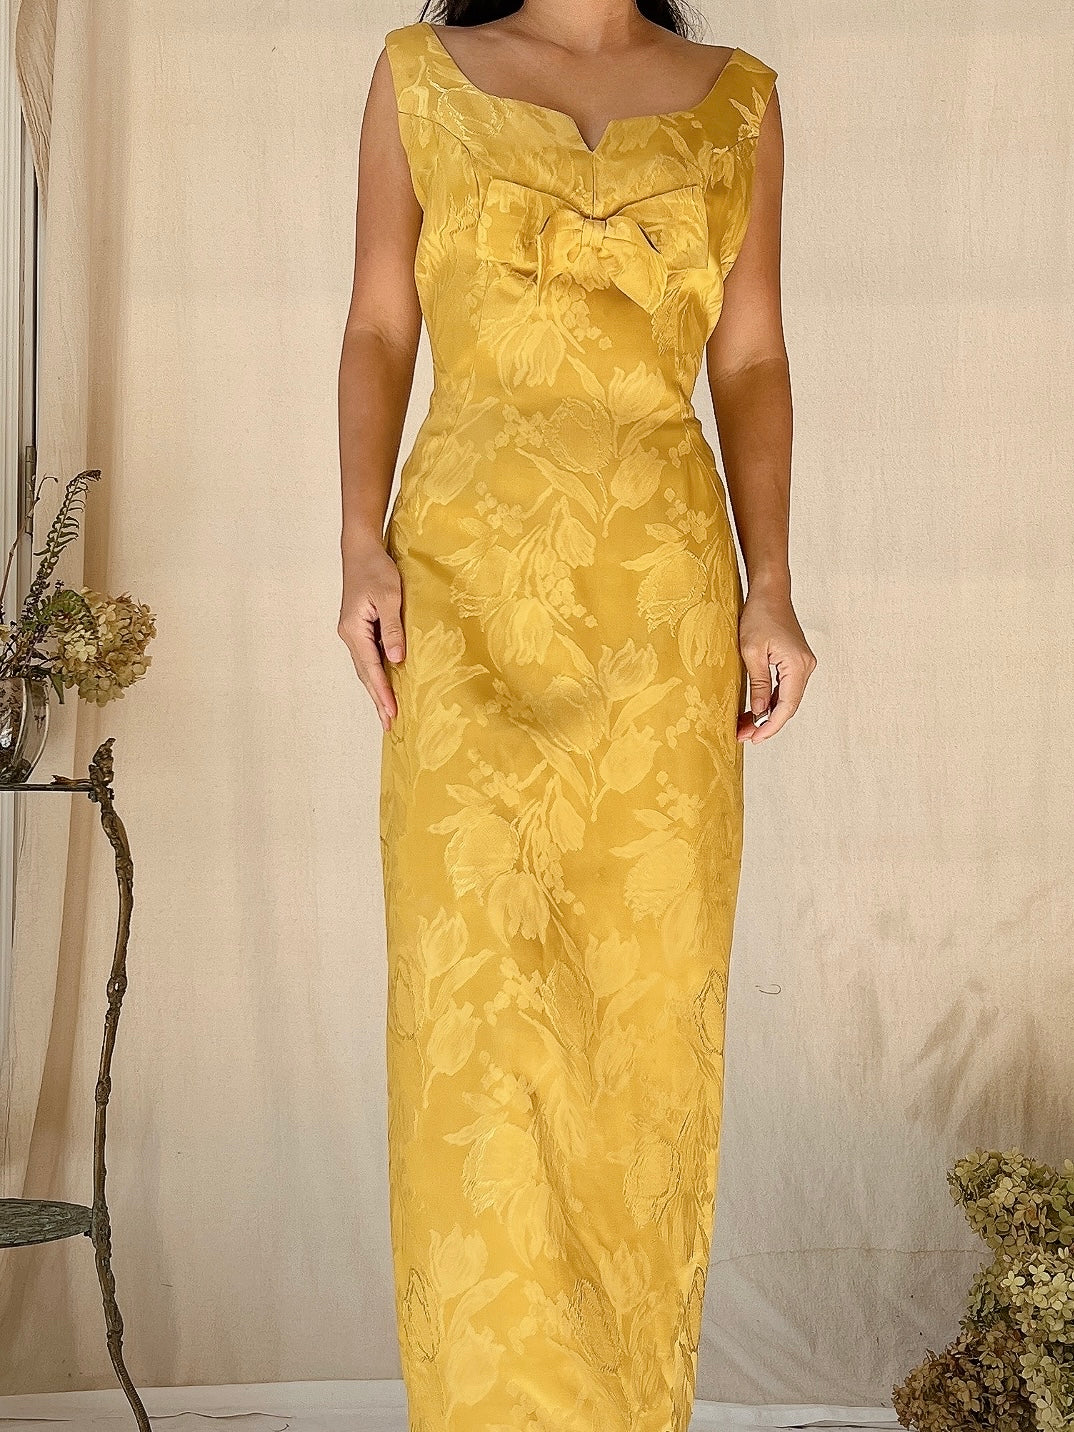 1960s Marigold Brocade Dress - S